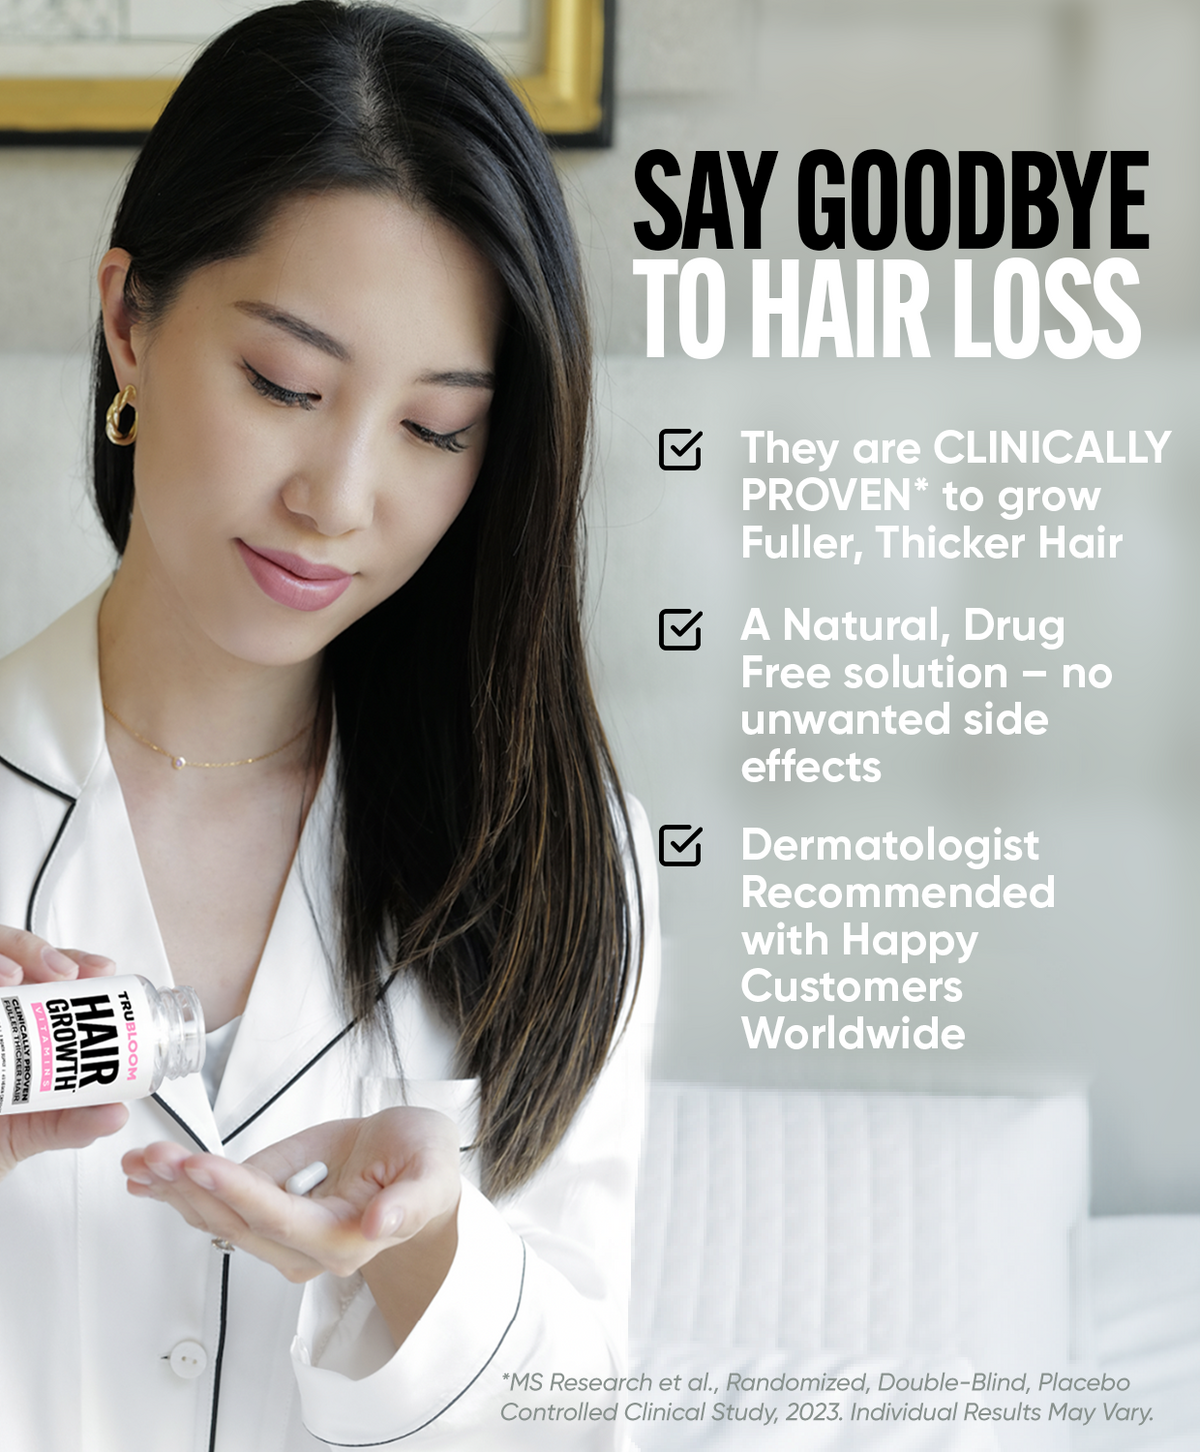 ST. TROPICA Hair Growth Vitamins - 1 Month Supply